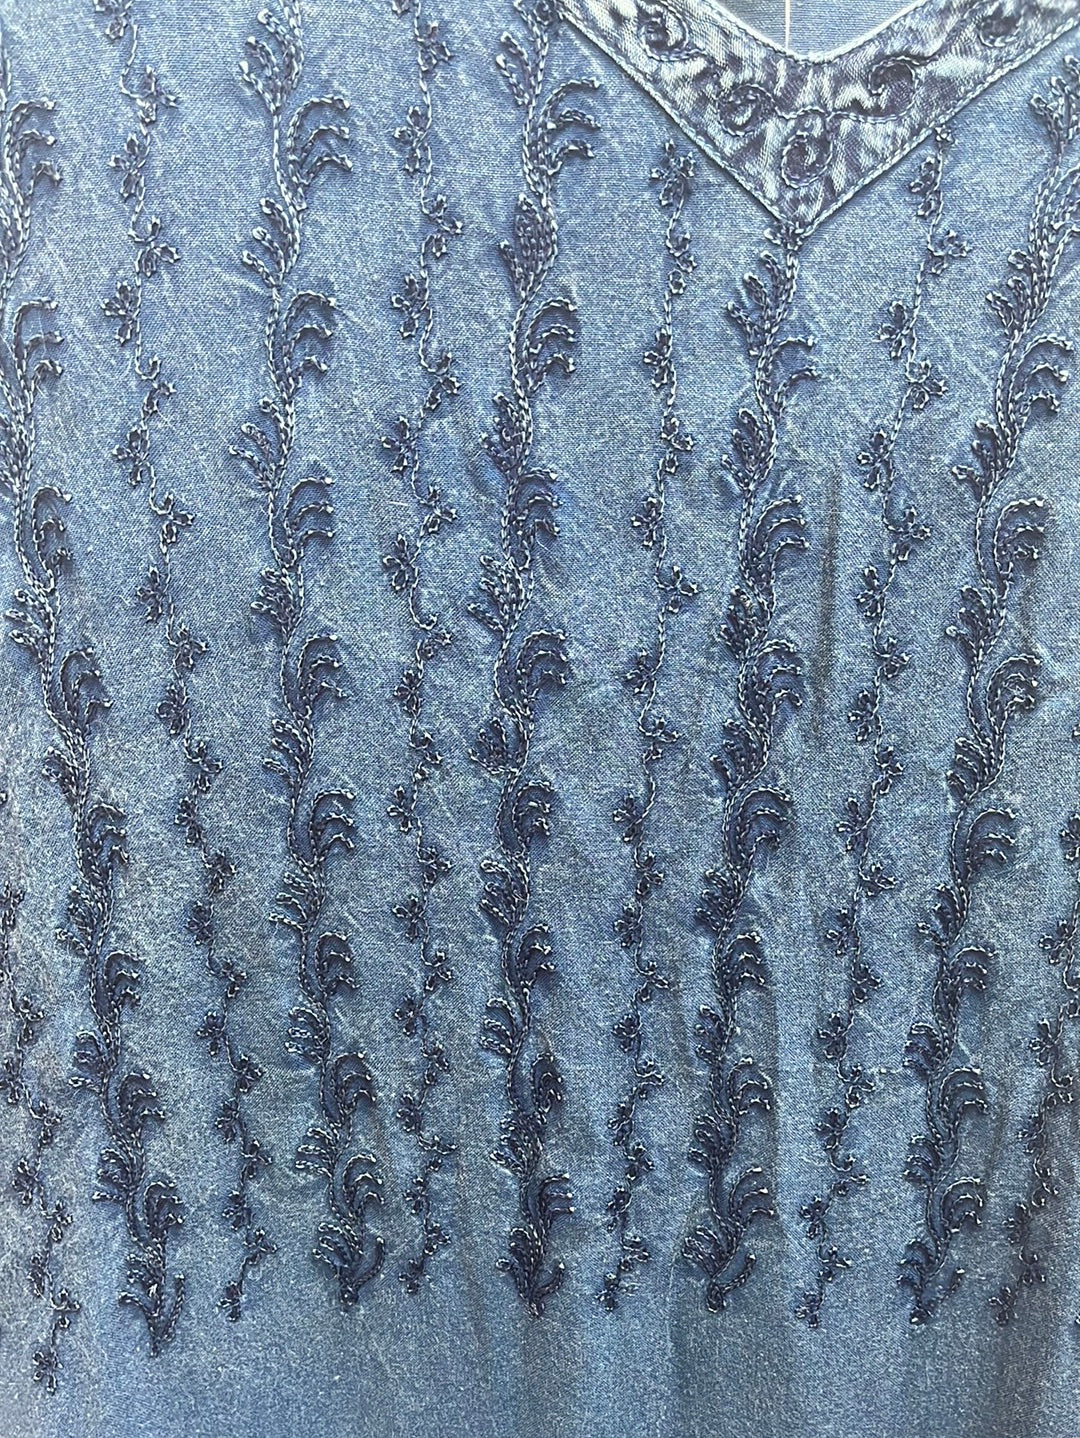 NWT -- SERENGETI blue Rayon Sleeveless Floral Embroidery Dress -- 2X